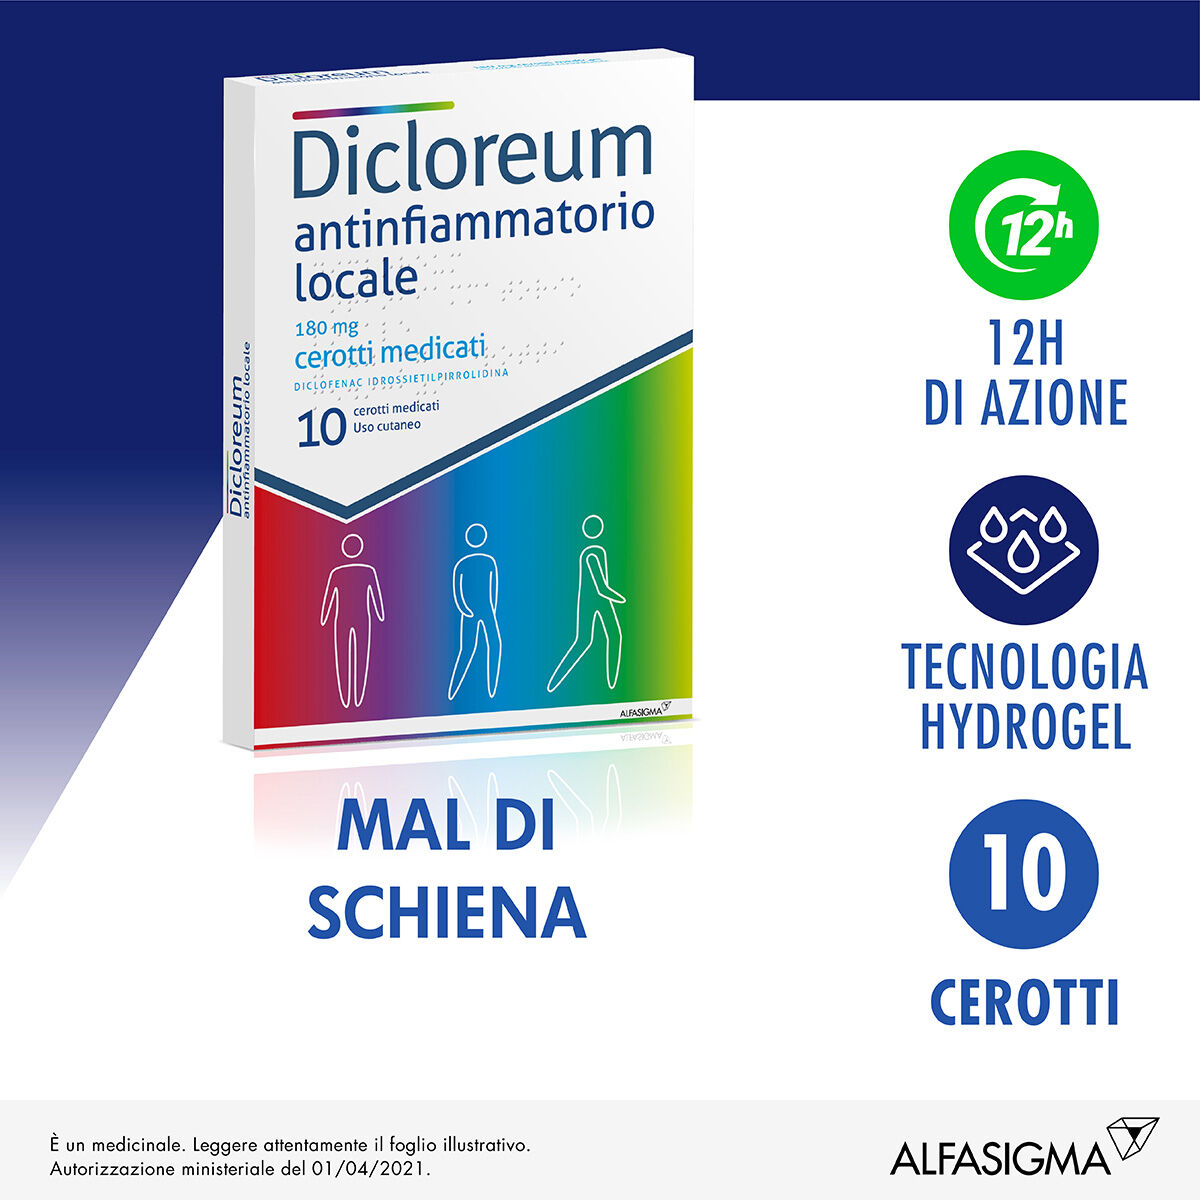 Alfasigma Spa Dicloreum - Antinfiammatorio Locale 10 cerotti medicati 180 mg